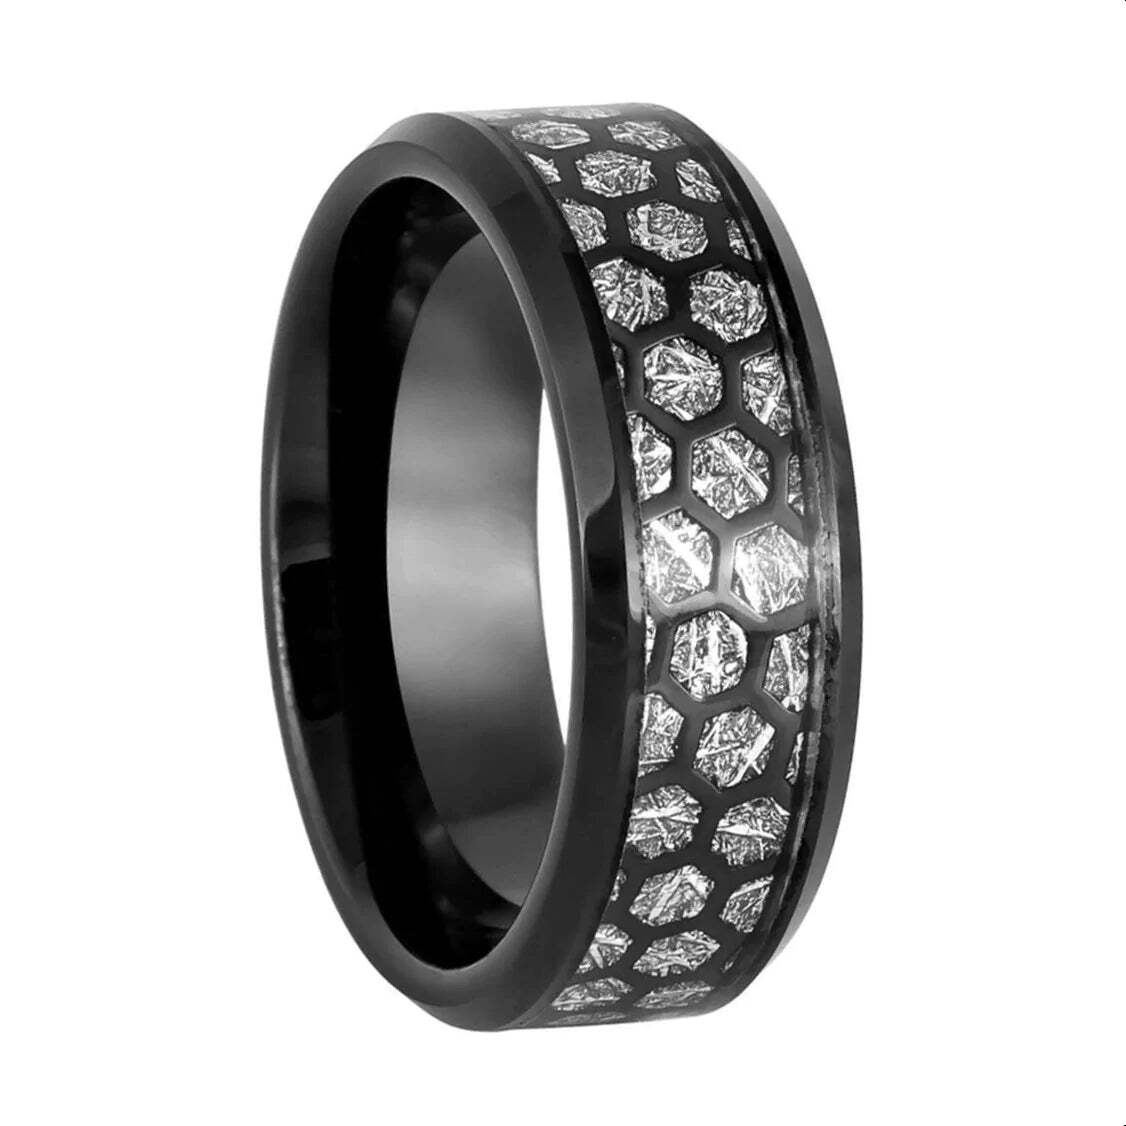 Imitation Meteorite & Hexagon Honeycomb Inlay Black Tungsten Men's Wedding Band